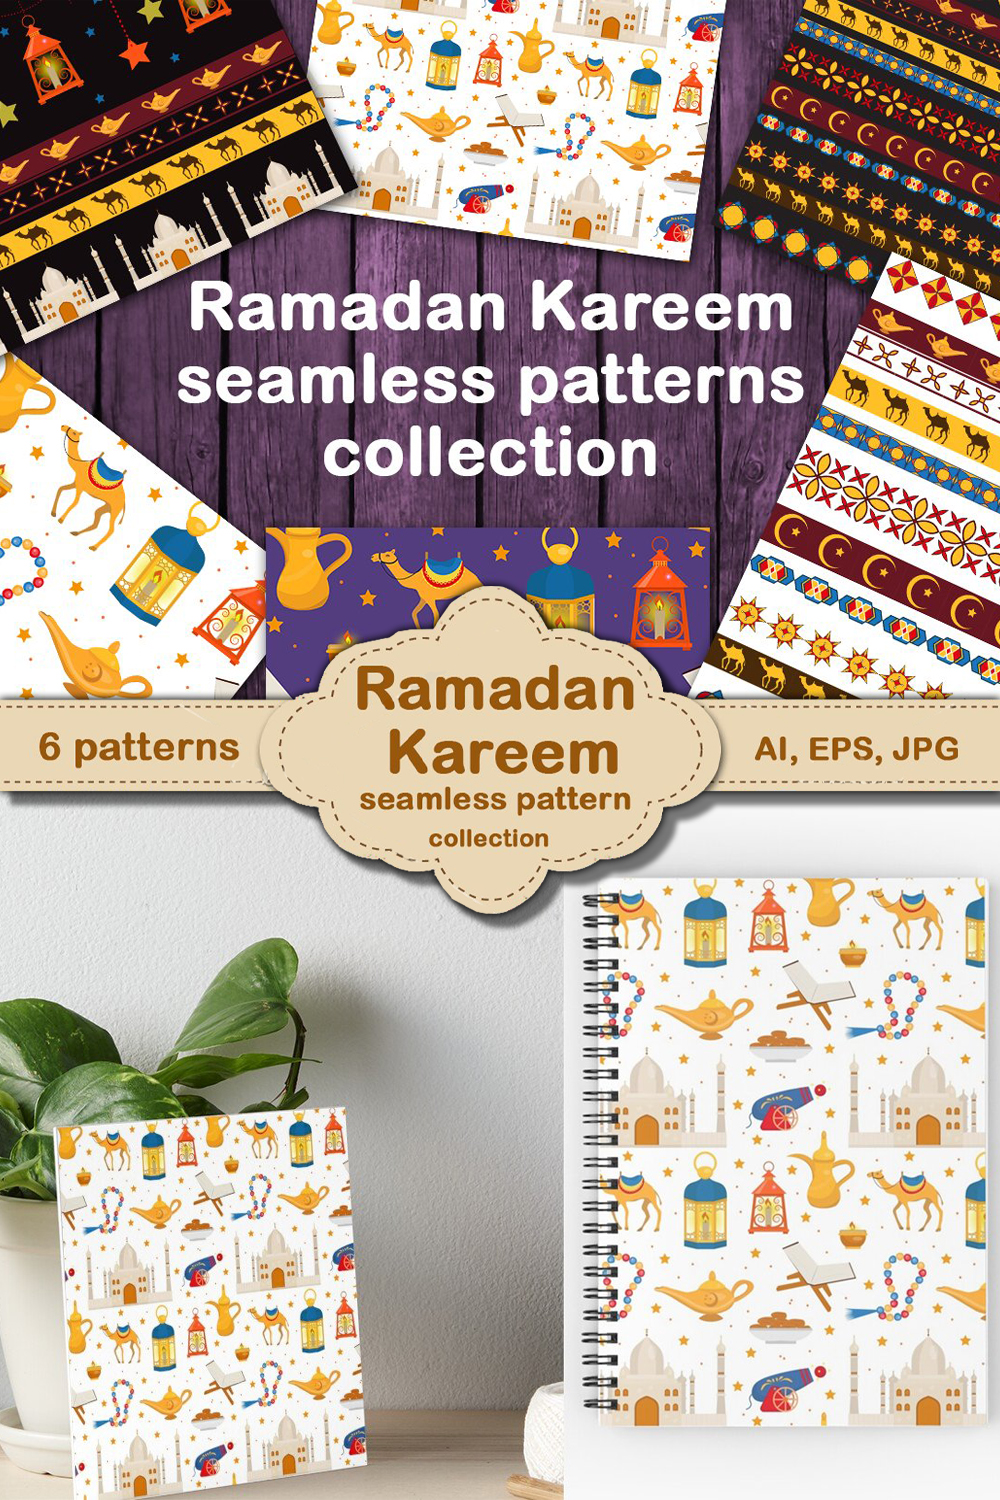 Ramadan kareem pattern collection of pinterest.